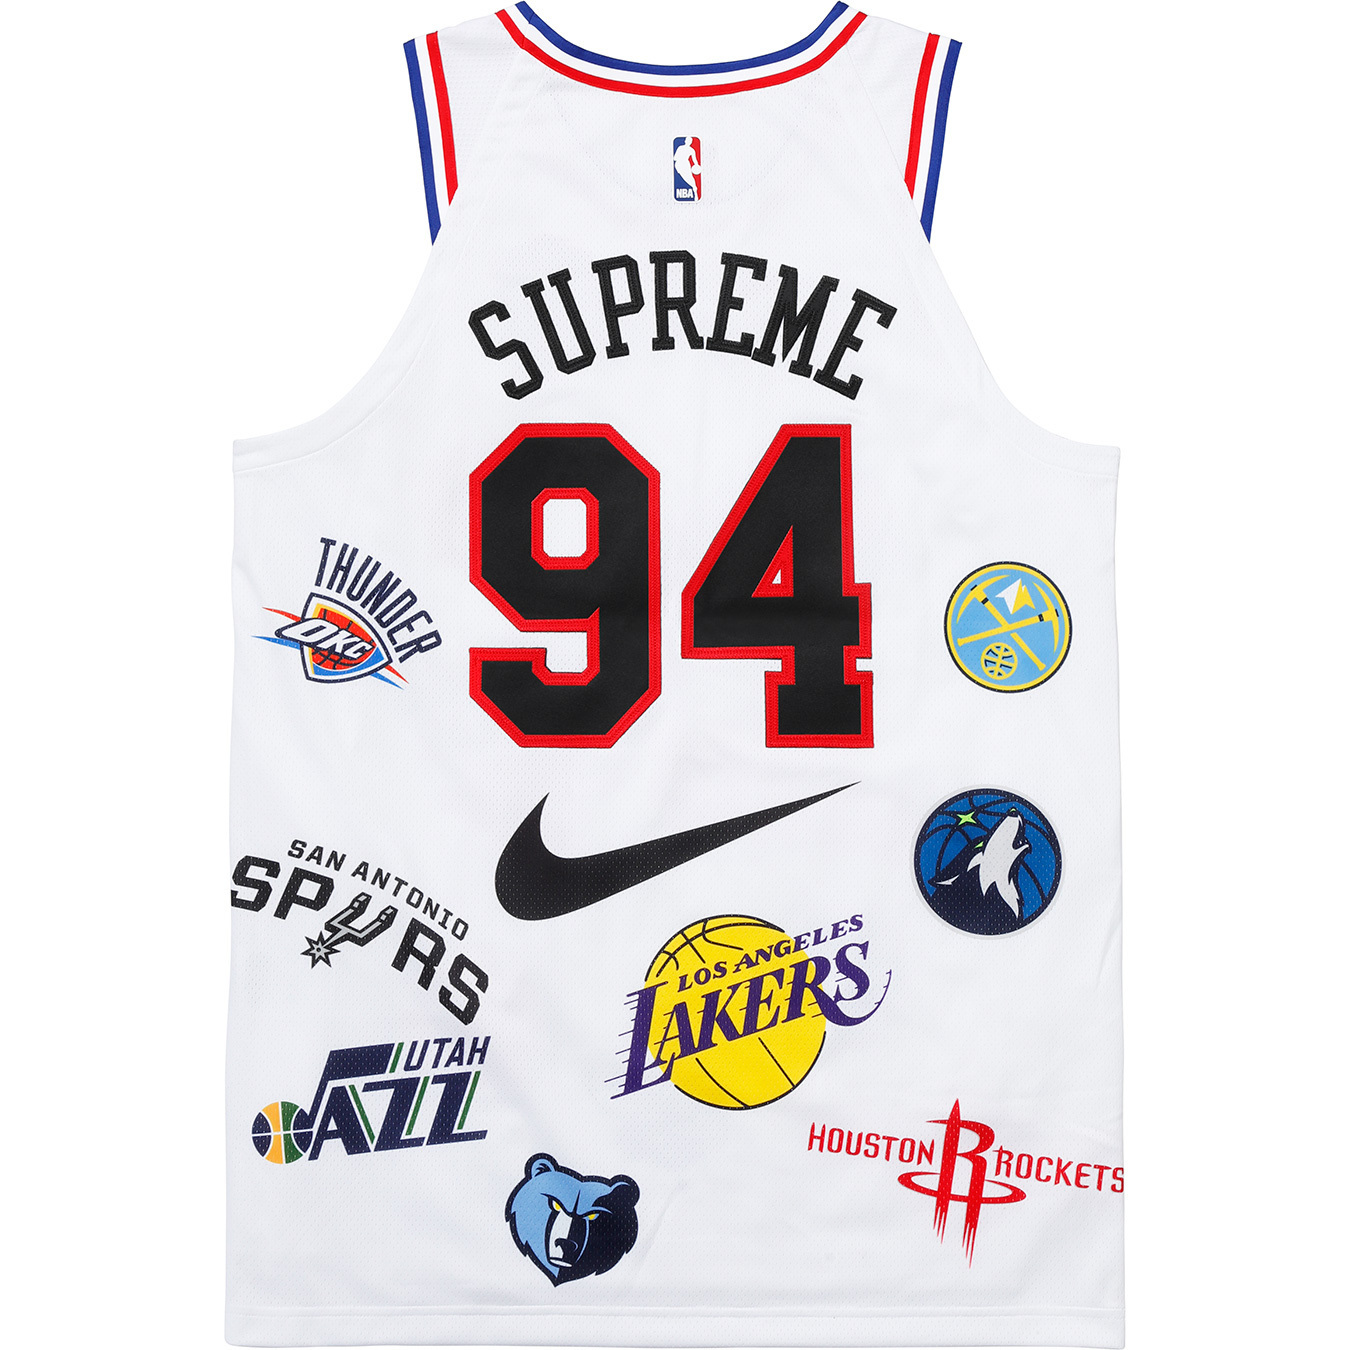 SUPREME NBA TEAMS AUTHENTIC JERSEY 球衣黑白(SS18)